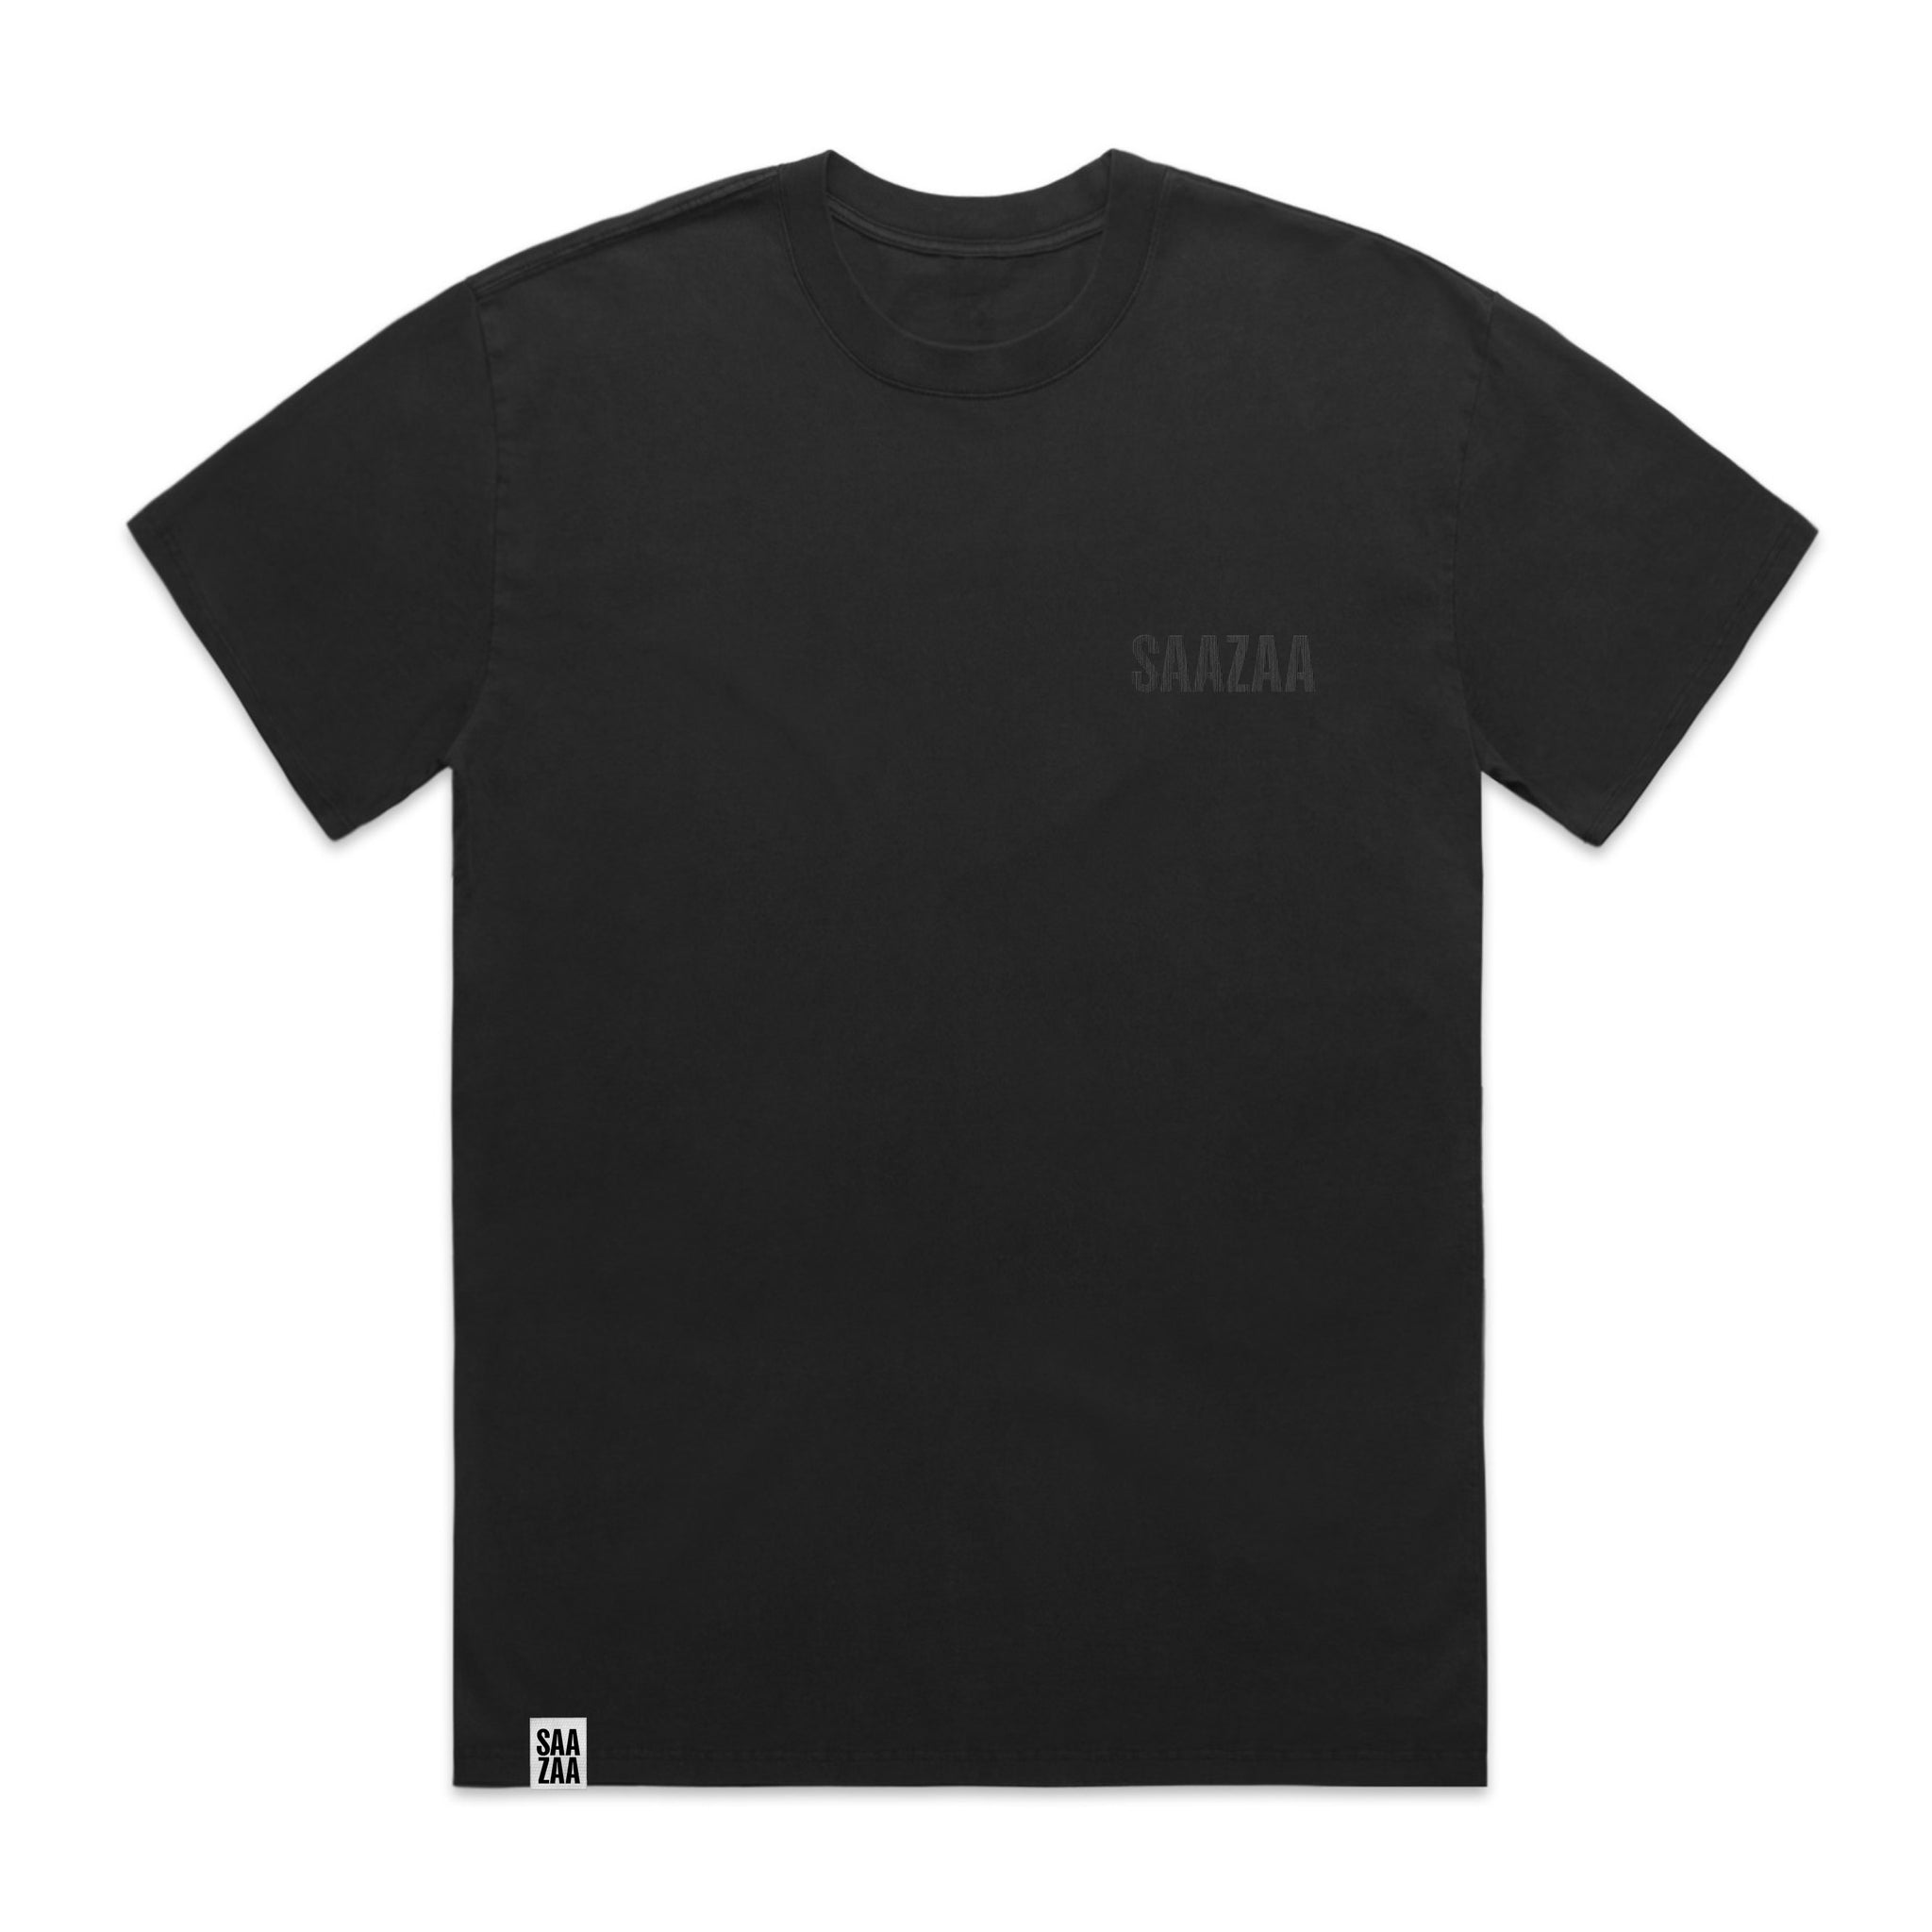 SAAZAA Heavyweight Embroidered T-Shirt